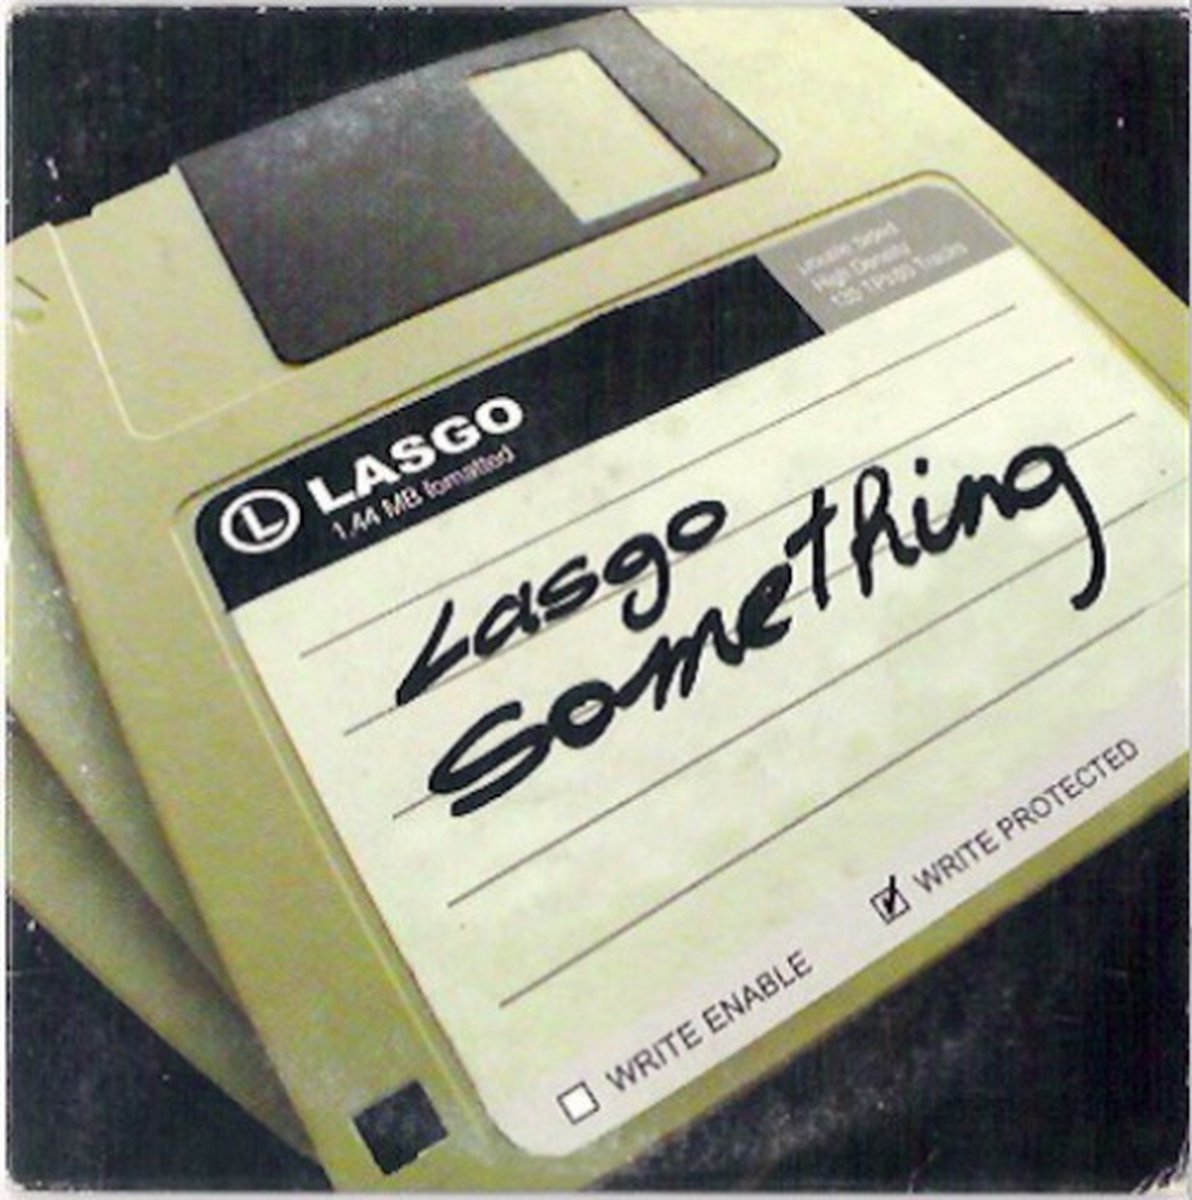 Something -2Tr- - Lasgo